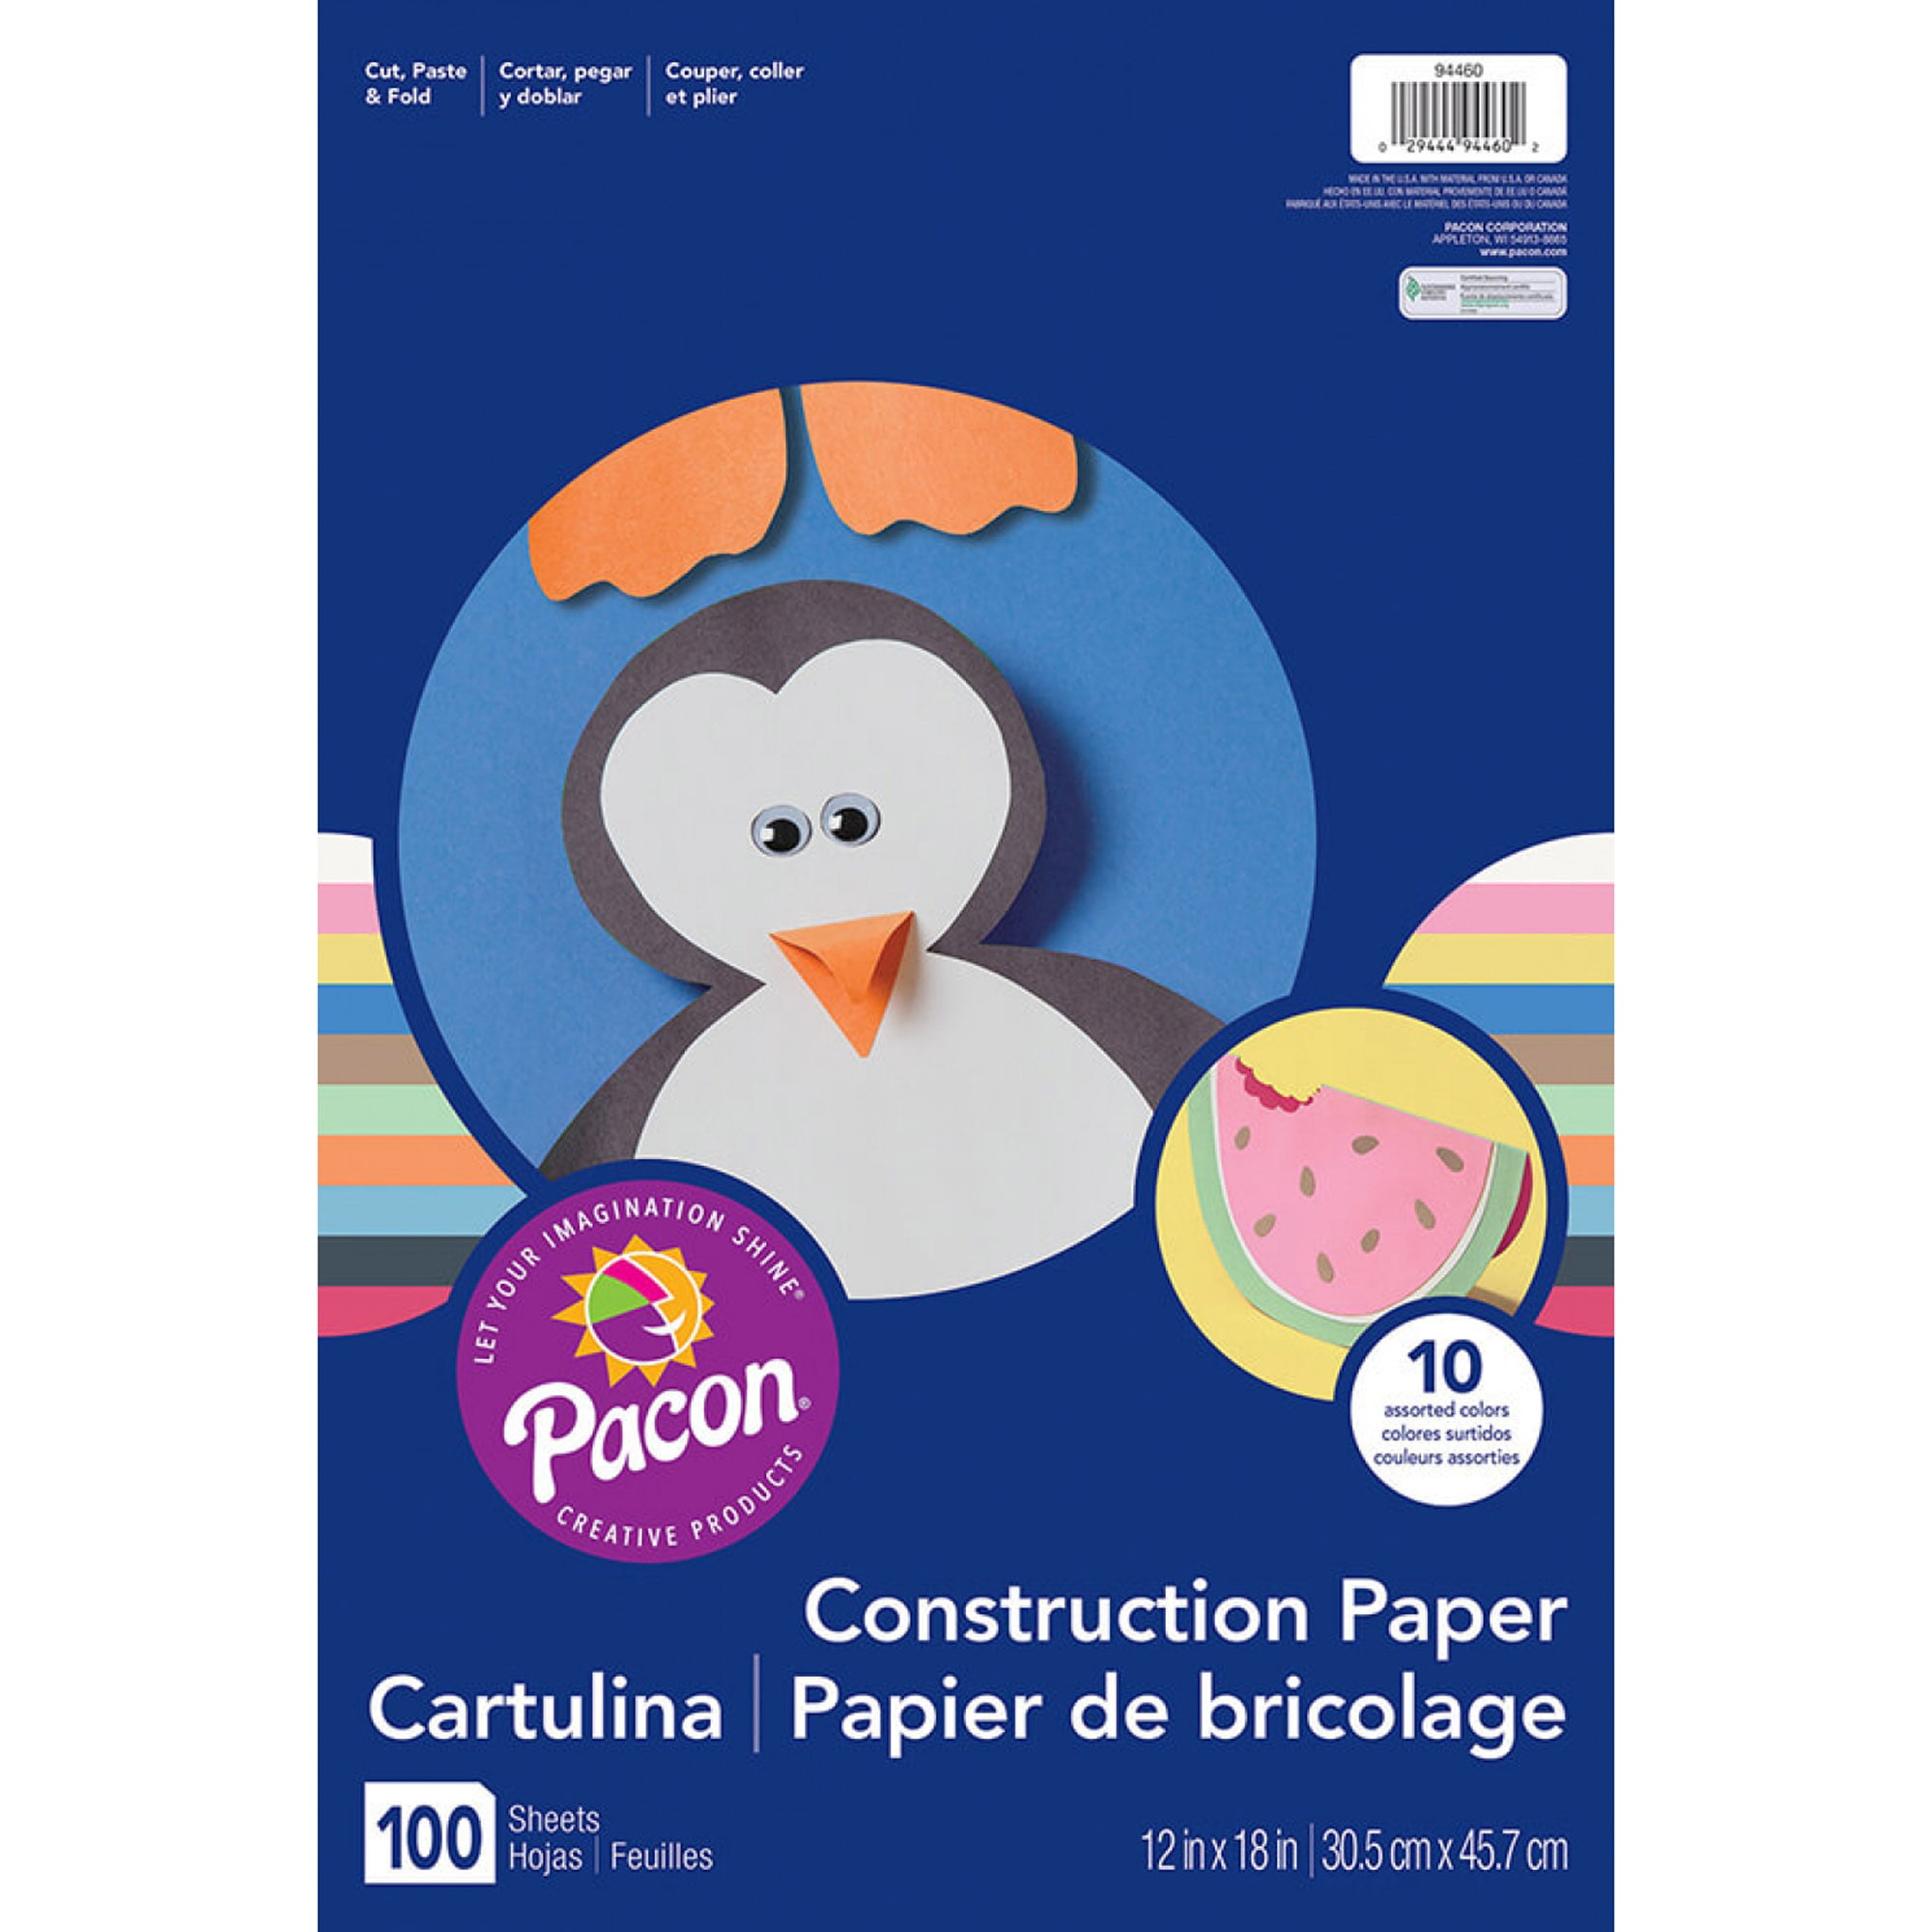 CONSTRUCTION PAPER SHEET PACKS 12X18 COLORS 6535